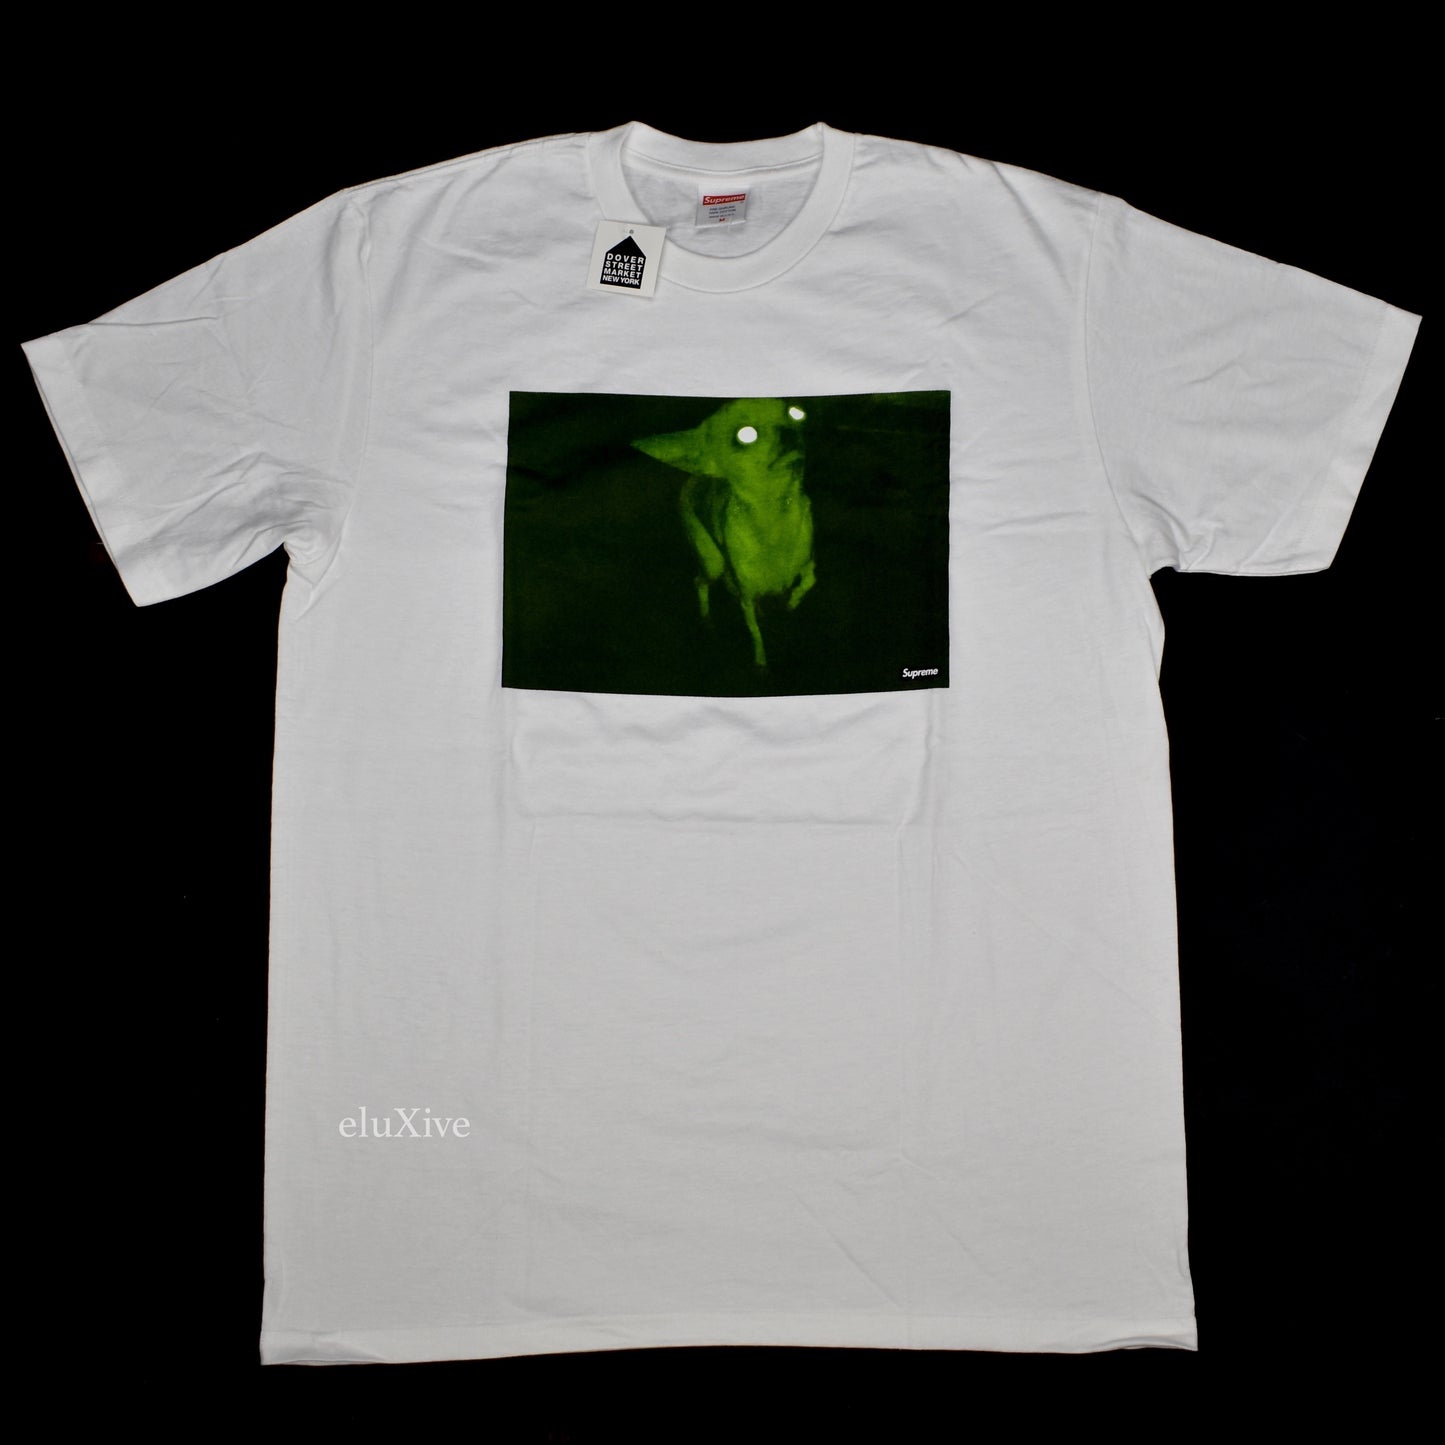 Supreme x Chris Cunningham - Chihuahua T-Shirt (White)